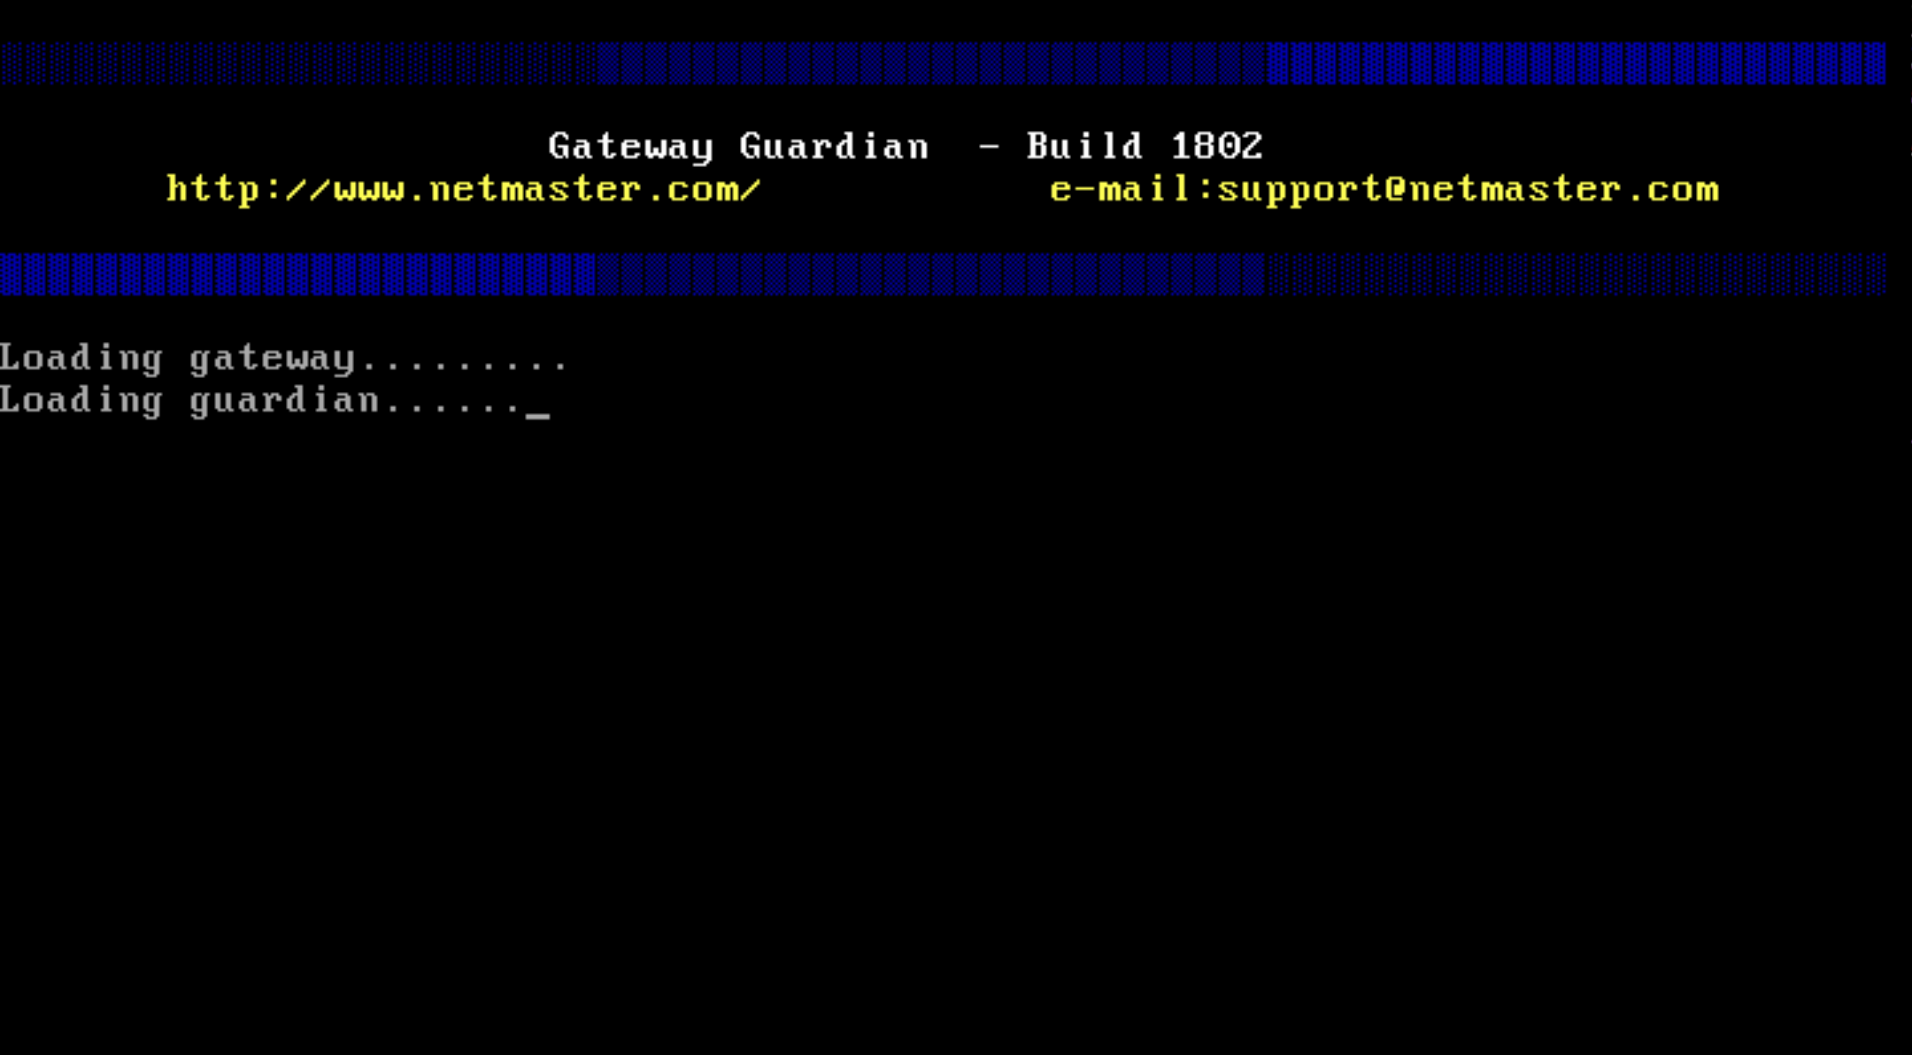 Gateway Guardian booting up, look familiar?